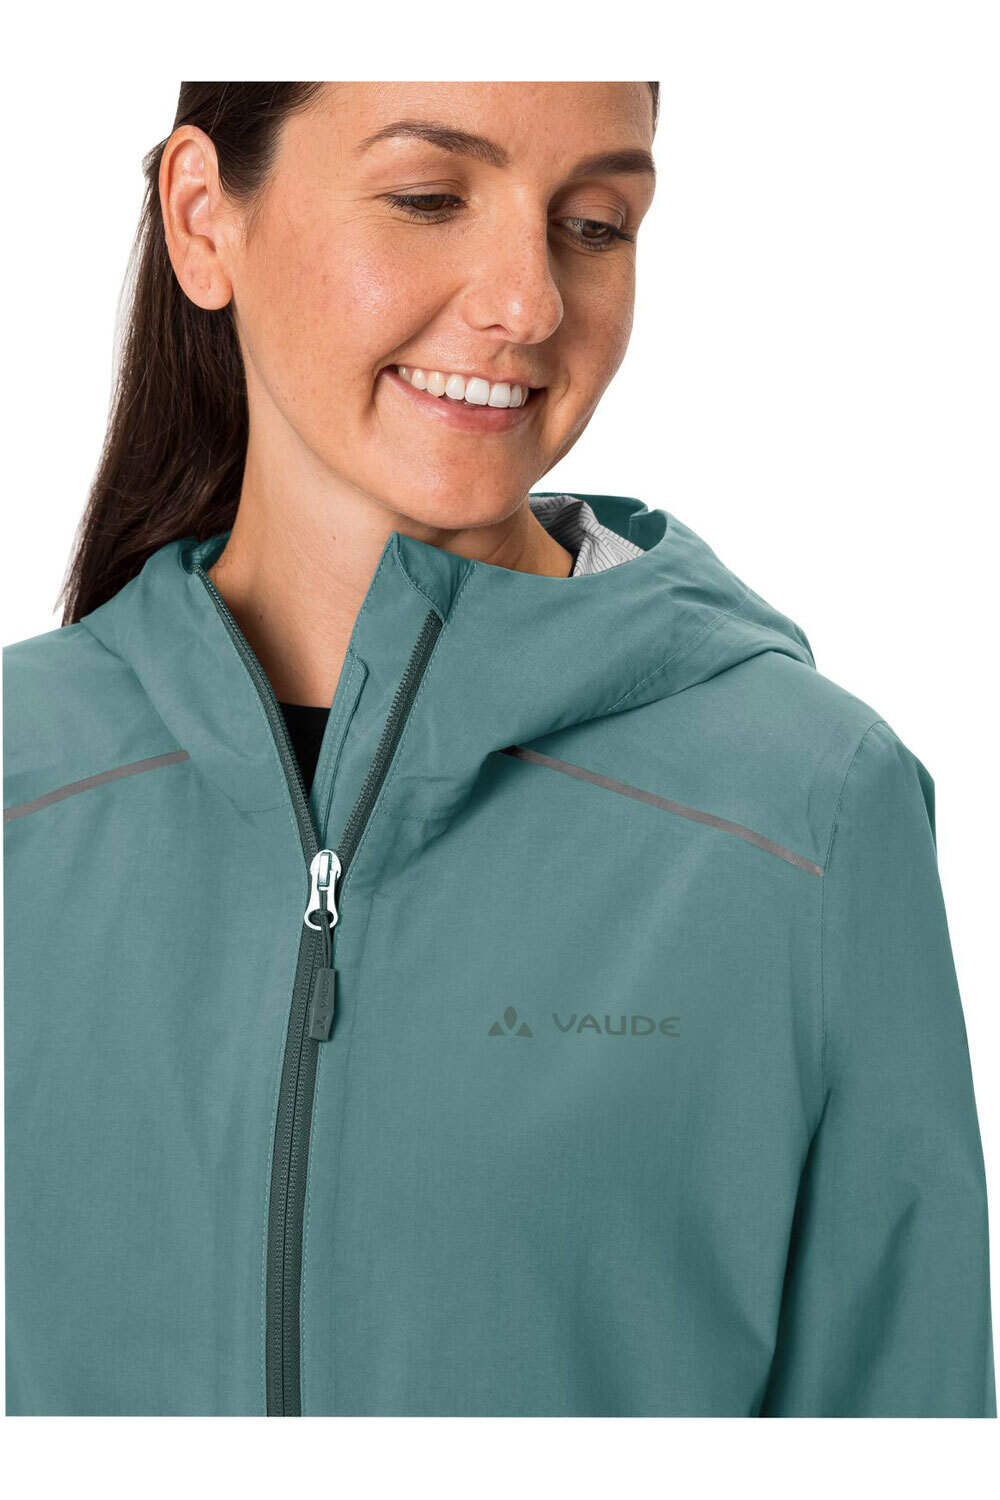 Vaude chaqueta impermeable ciclismo mujer Women's Yaras Jacket IV vista detalle